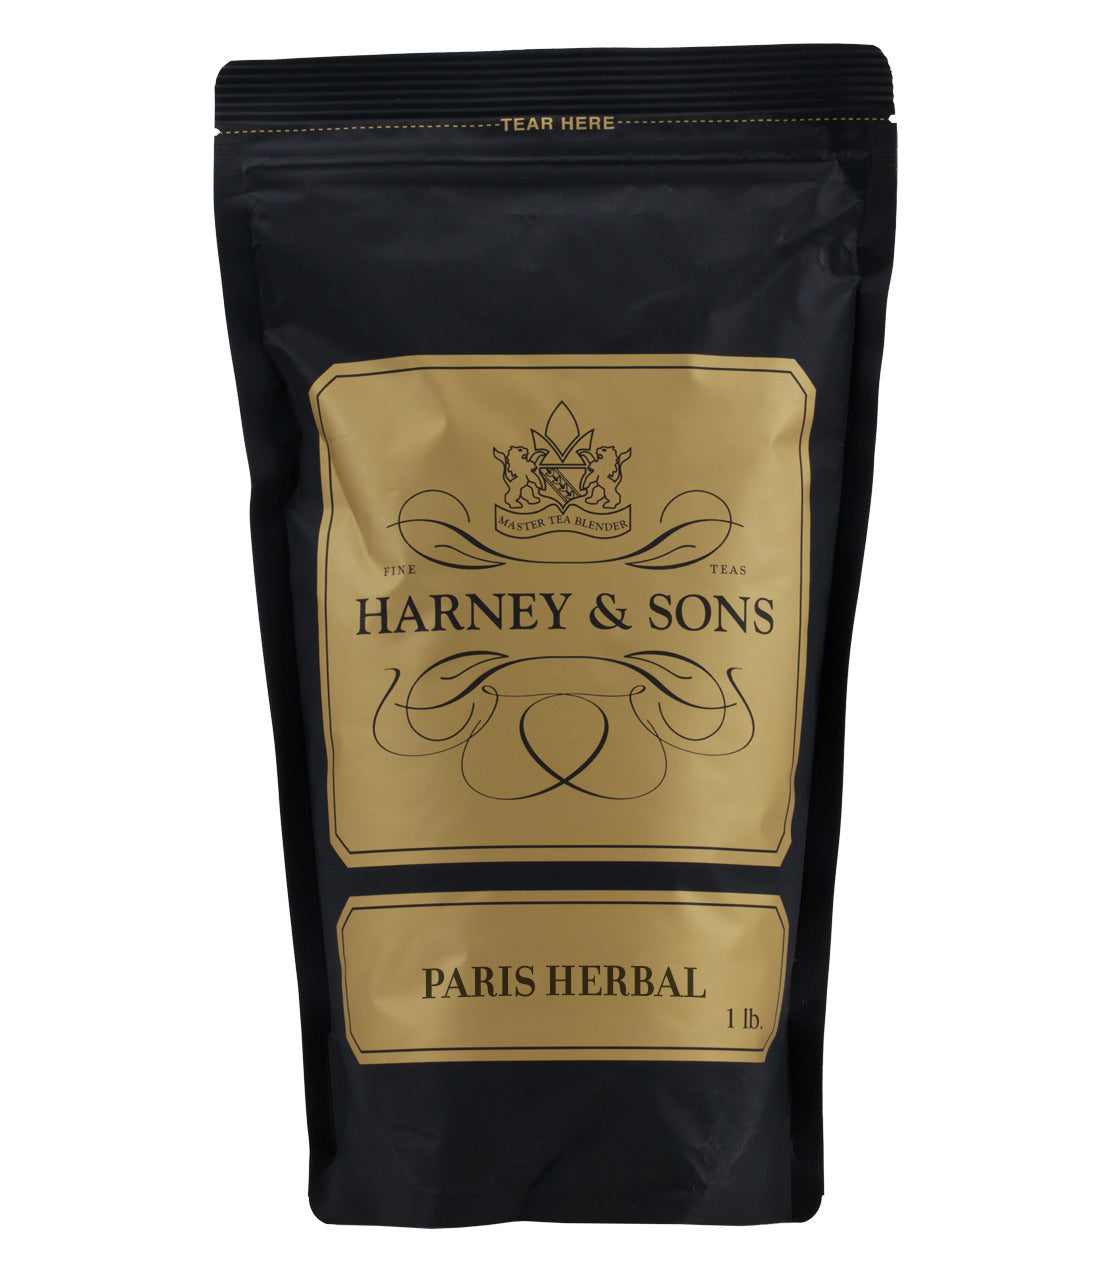 Paris Herbal - Loose 1 lb. Bag - Harney & Sons Fine Teas